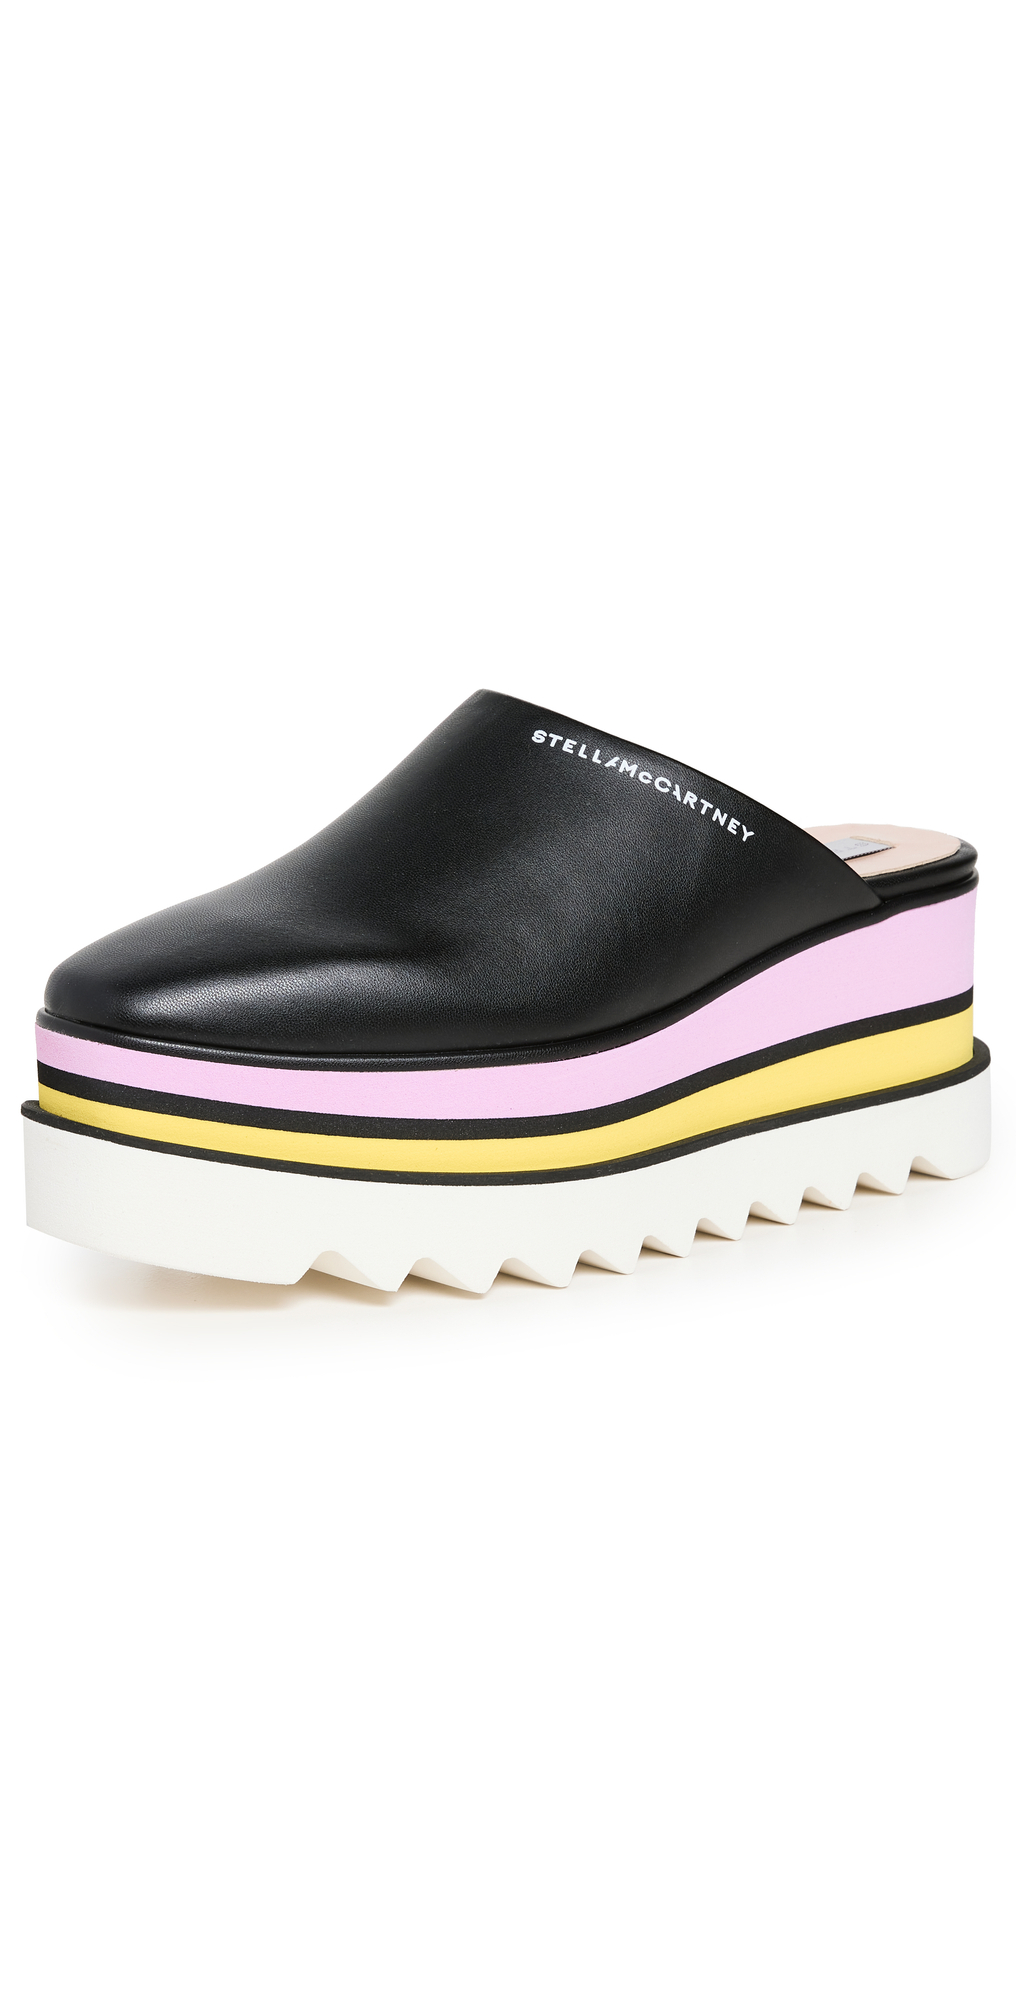 Stella McCartney Sneaker Elyse Alter Mat Flats in black